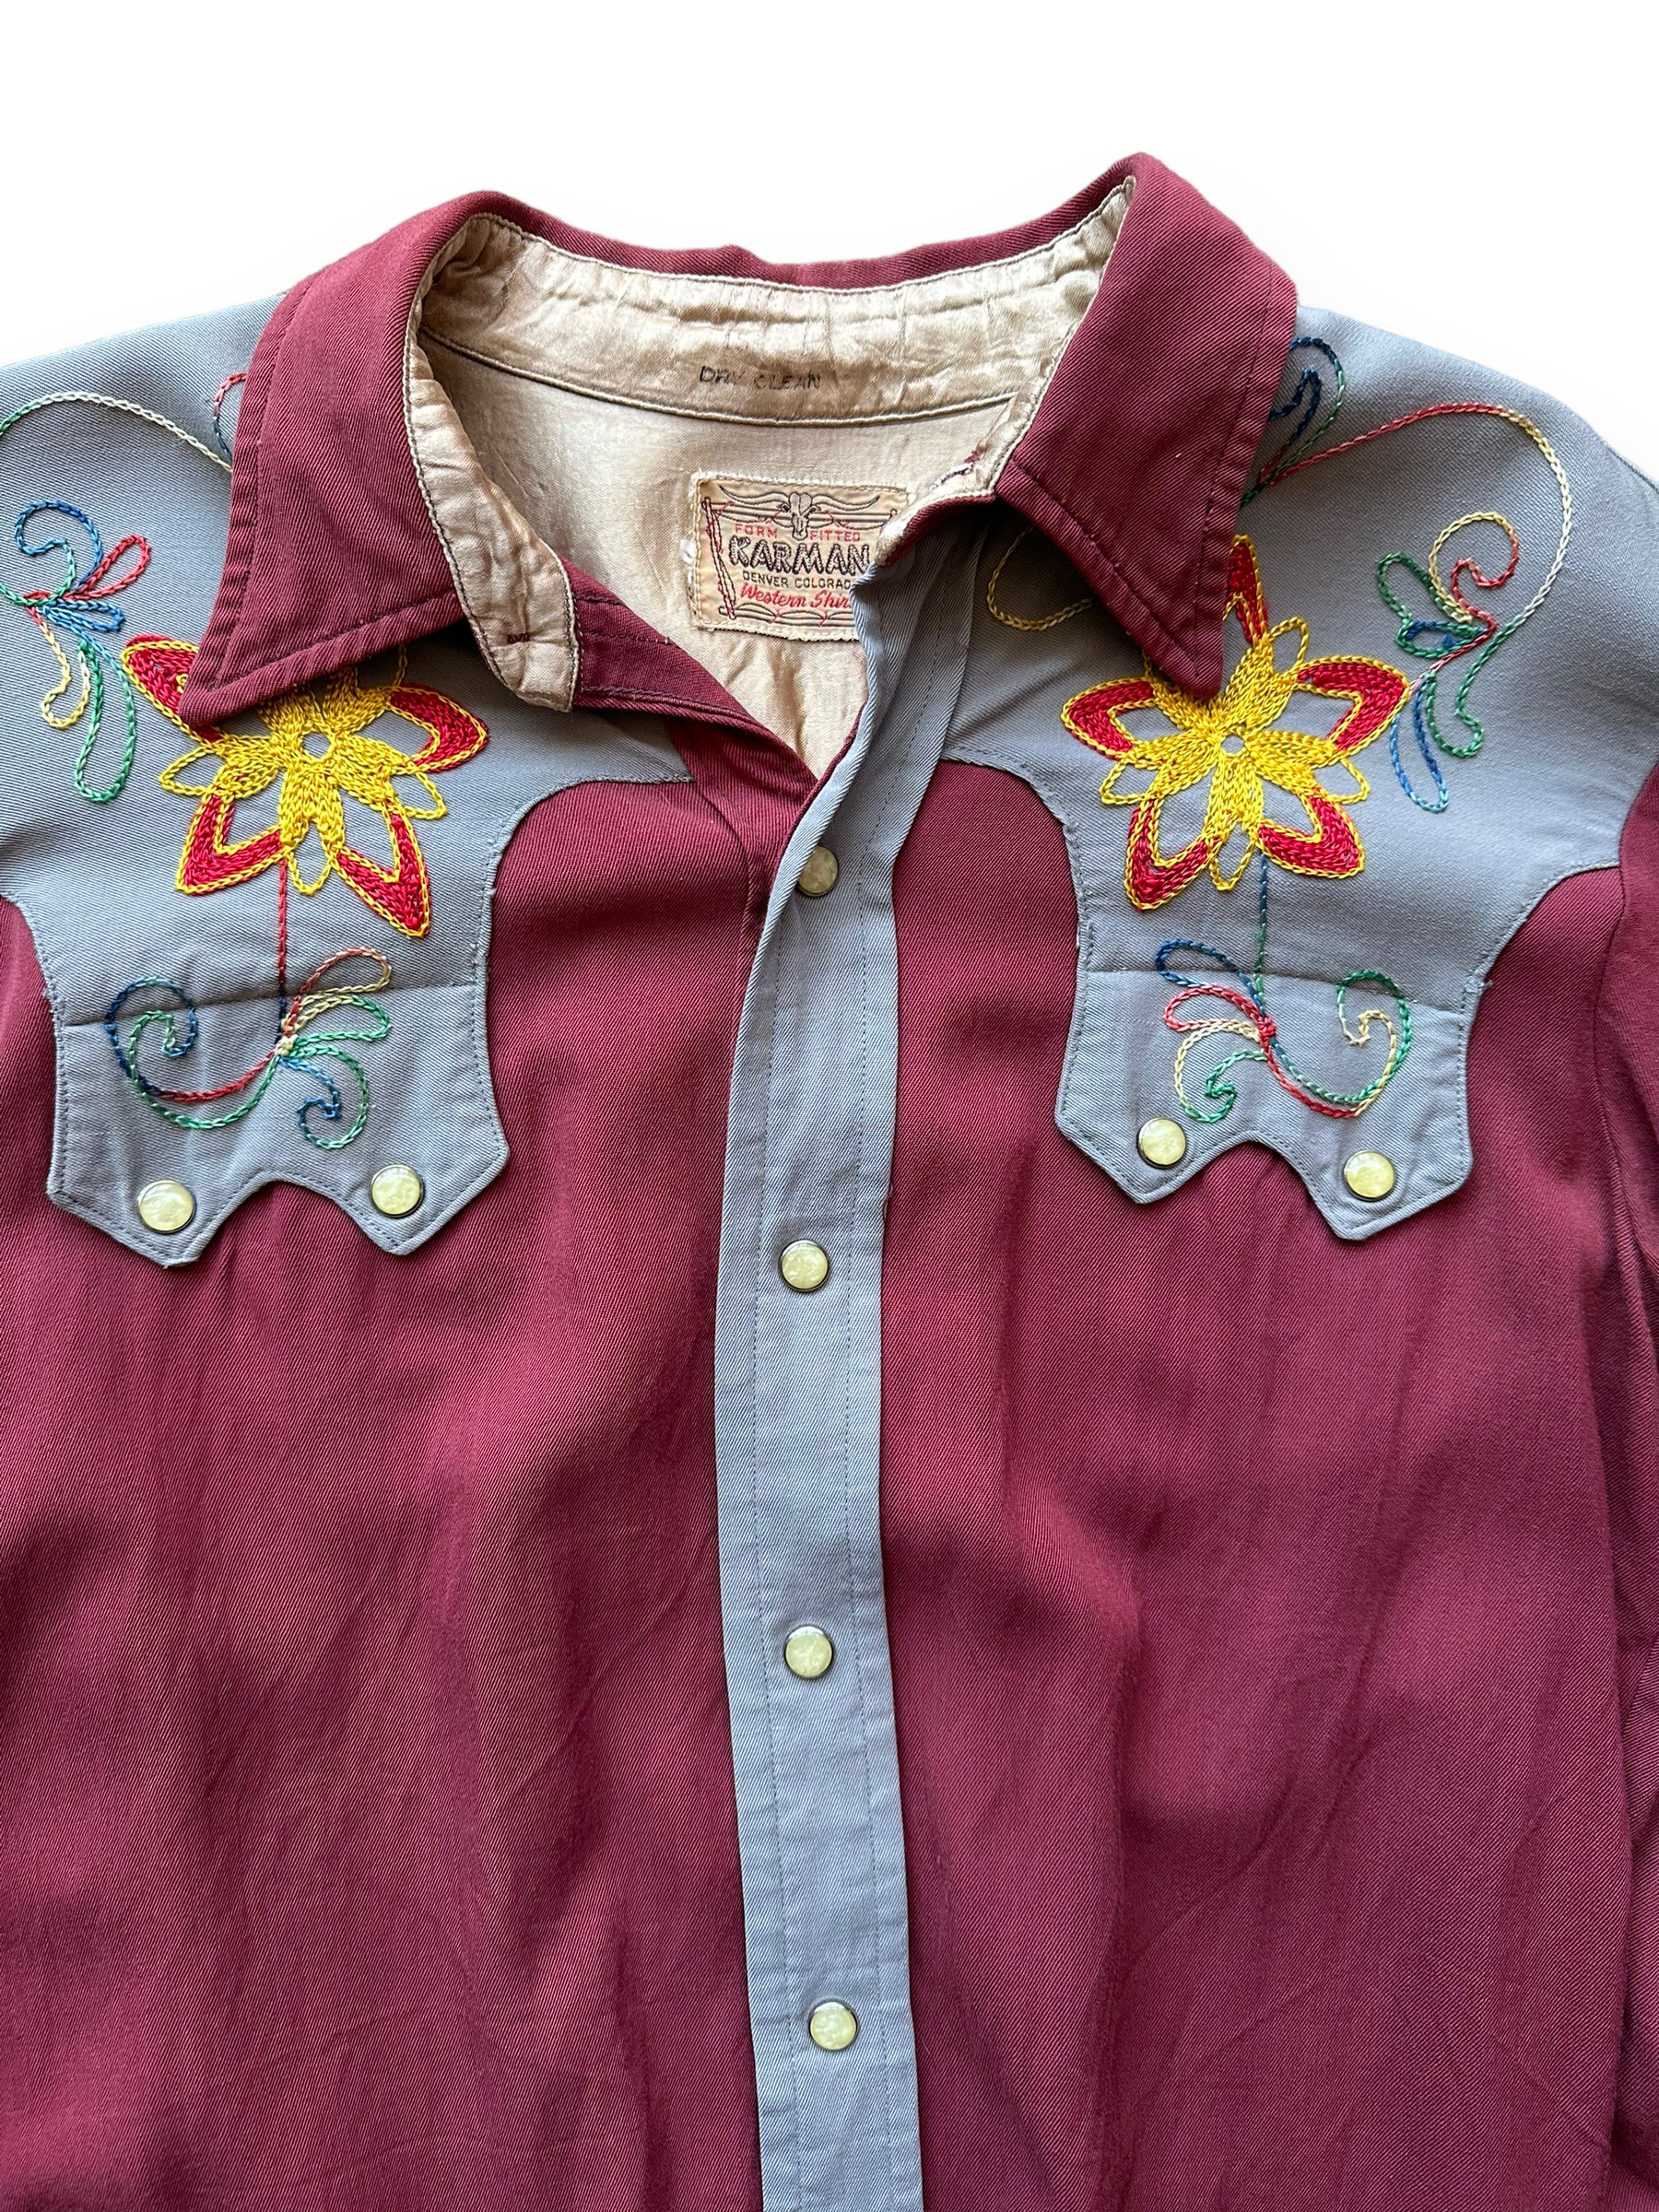 Vintage Roper Western Shirt Karman 1950s-